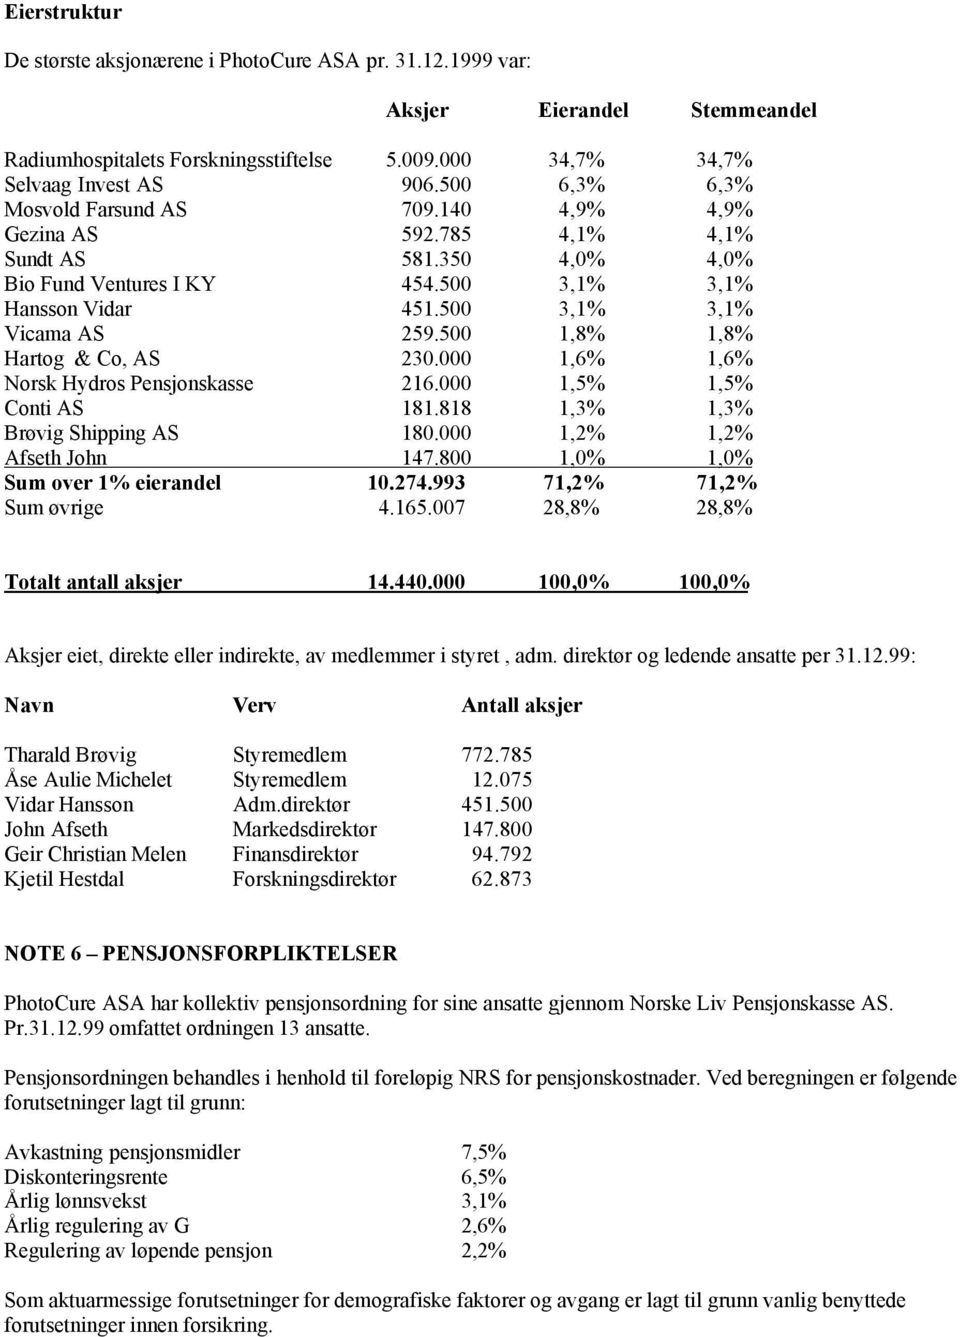 500 1,8% 1,8% Hartog & Co, AS 230.000 1,6% 1,6% Norsk Hydros Pensjonskasse 216.000 1,5% 1,5% Conti AS 181.818 1,3% 1,3% Brøvig Shipping AS 180.000 1,2% 1,2% Afseth John 147.